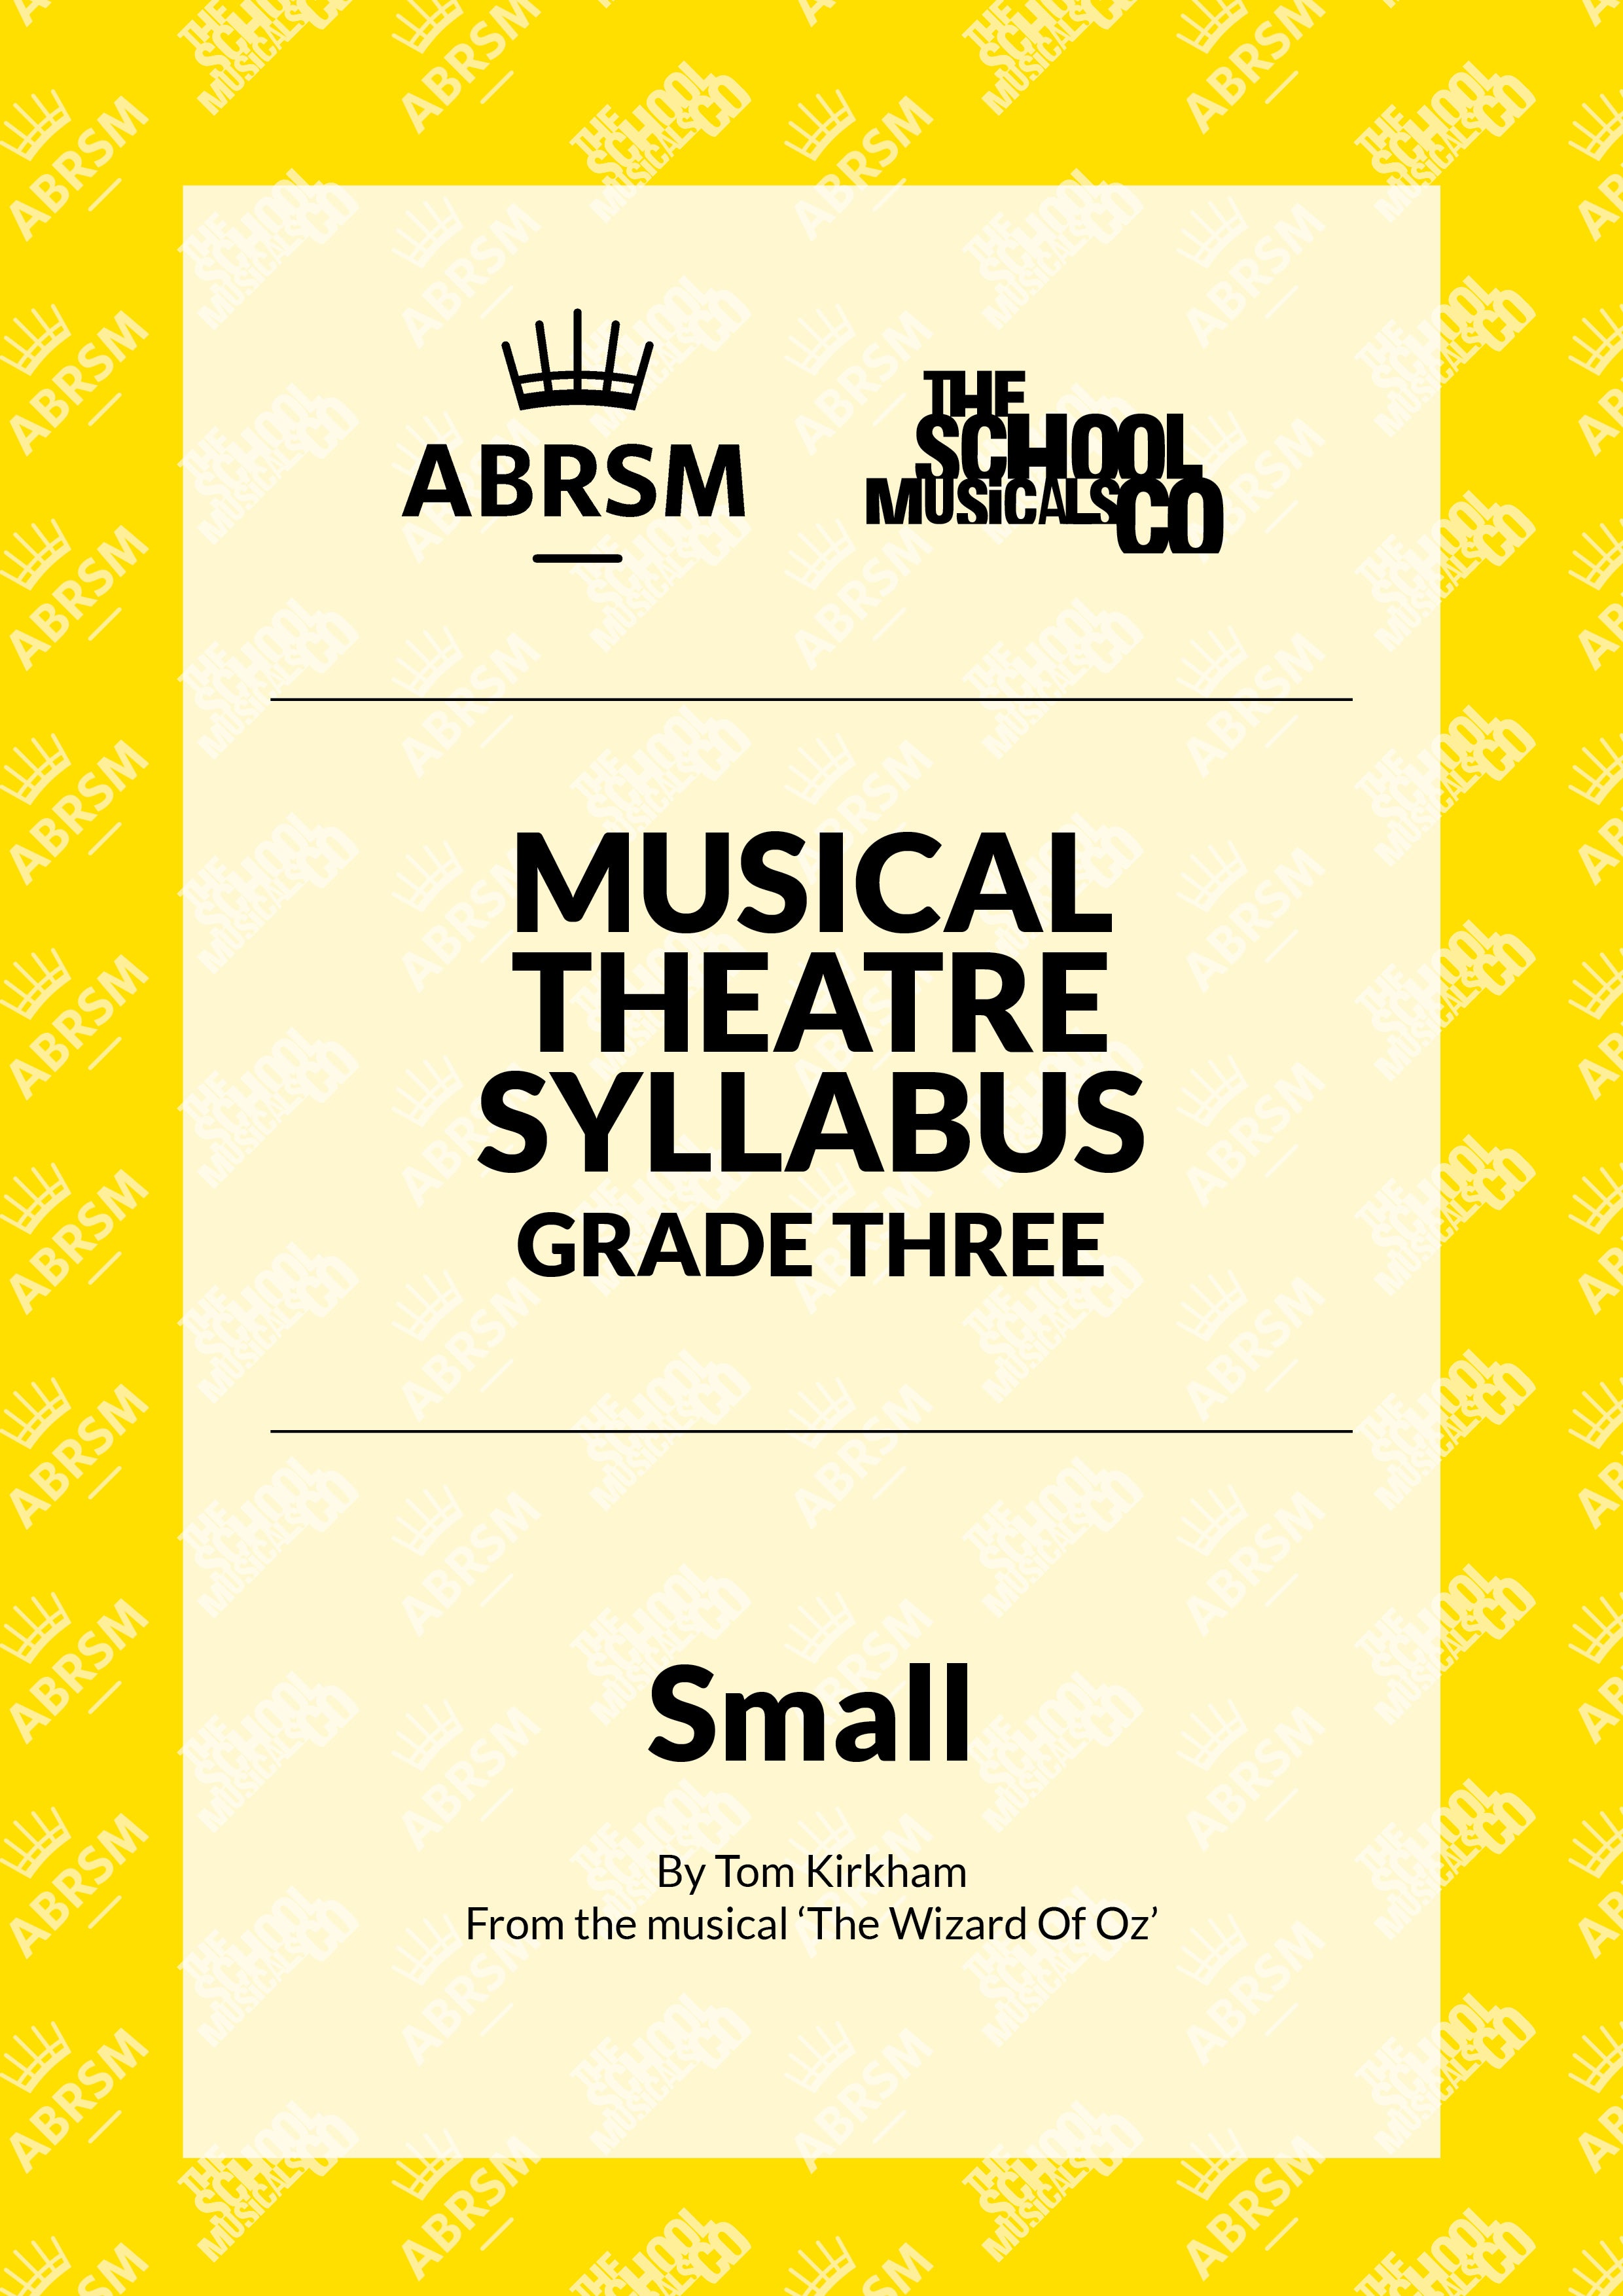 Small - ABRSM Musical Theatre Syllabus Grade Three